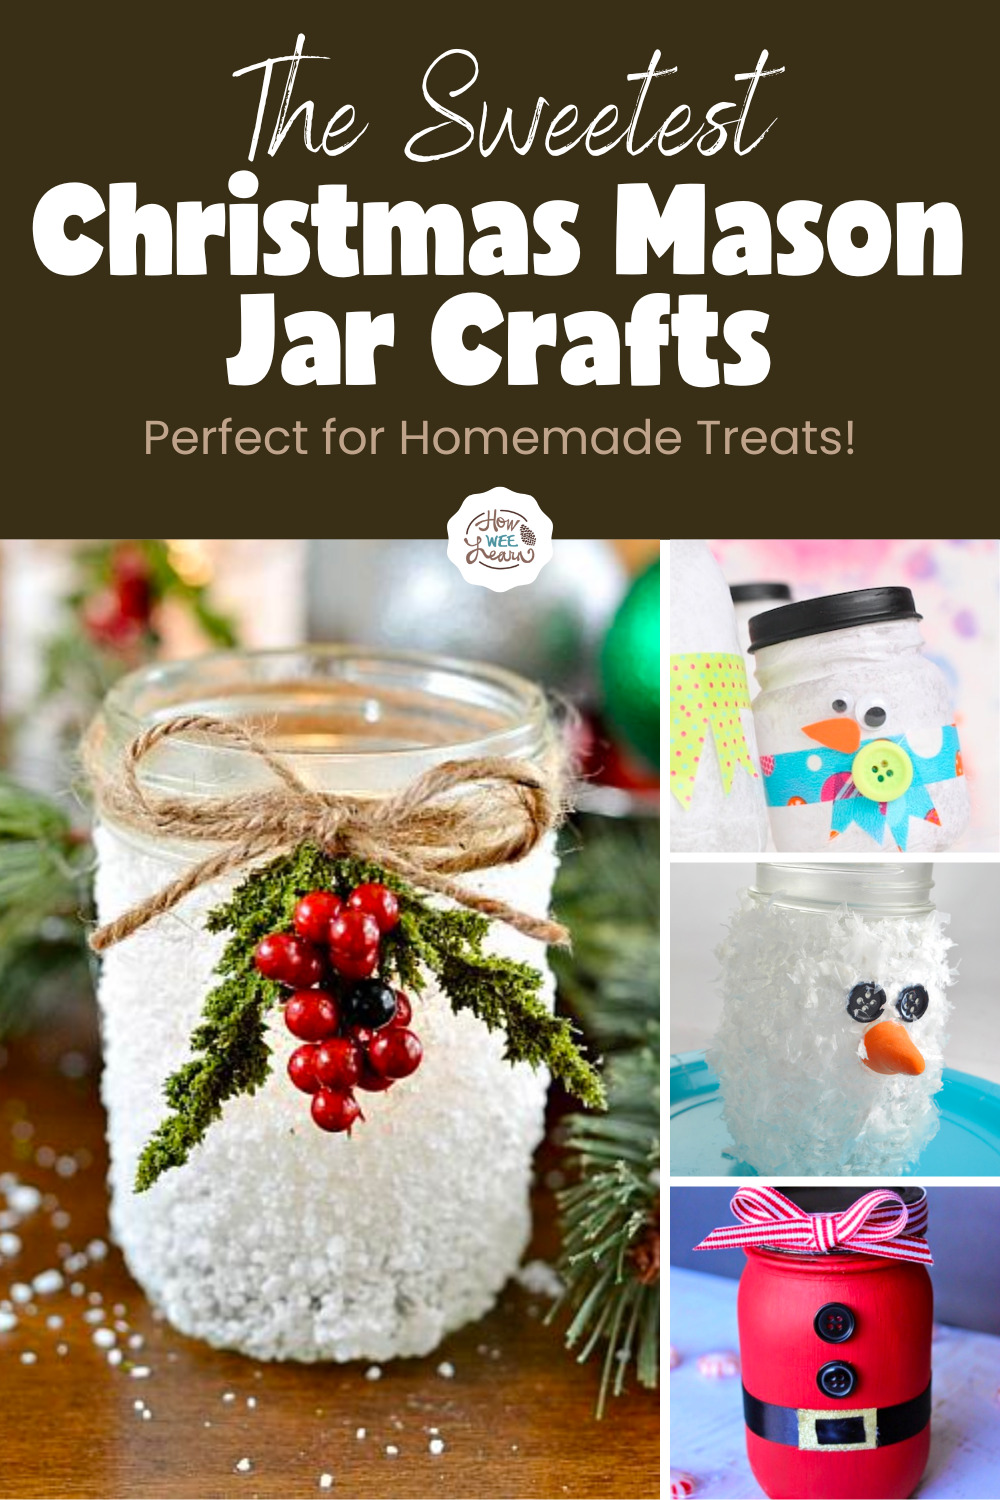 The Sweetest Christmas Mason Jar Crafts - Perfect for Homemade Christmas Treats!